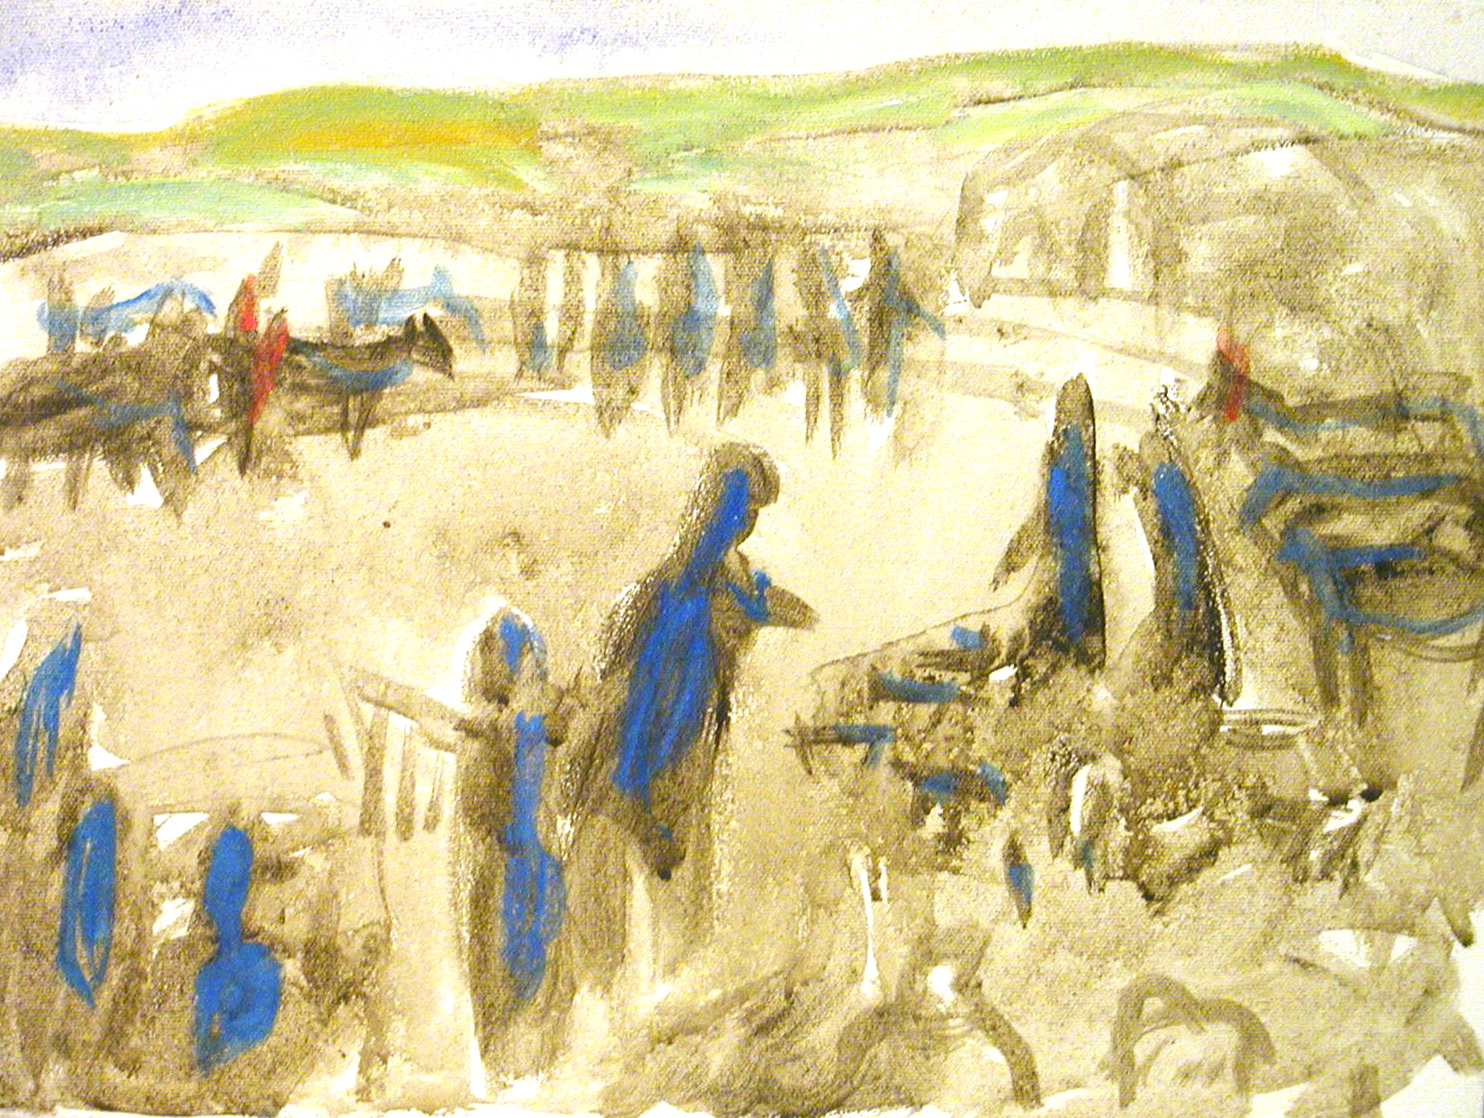 The night people heading to Bethlehem